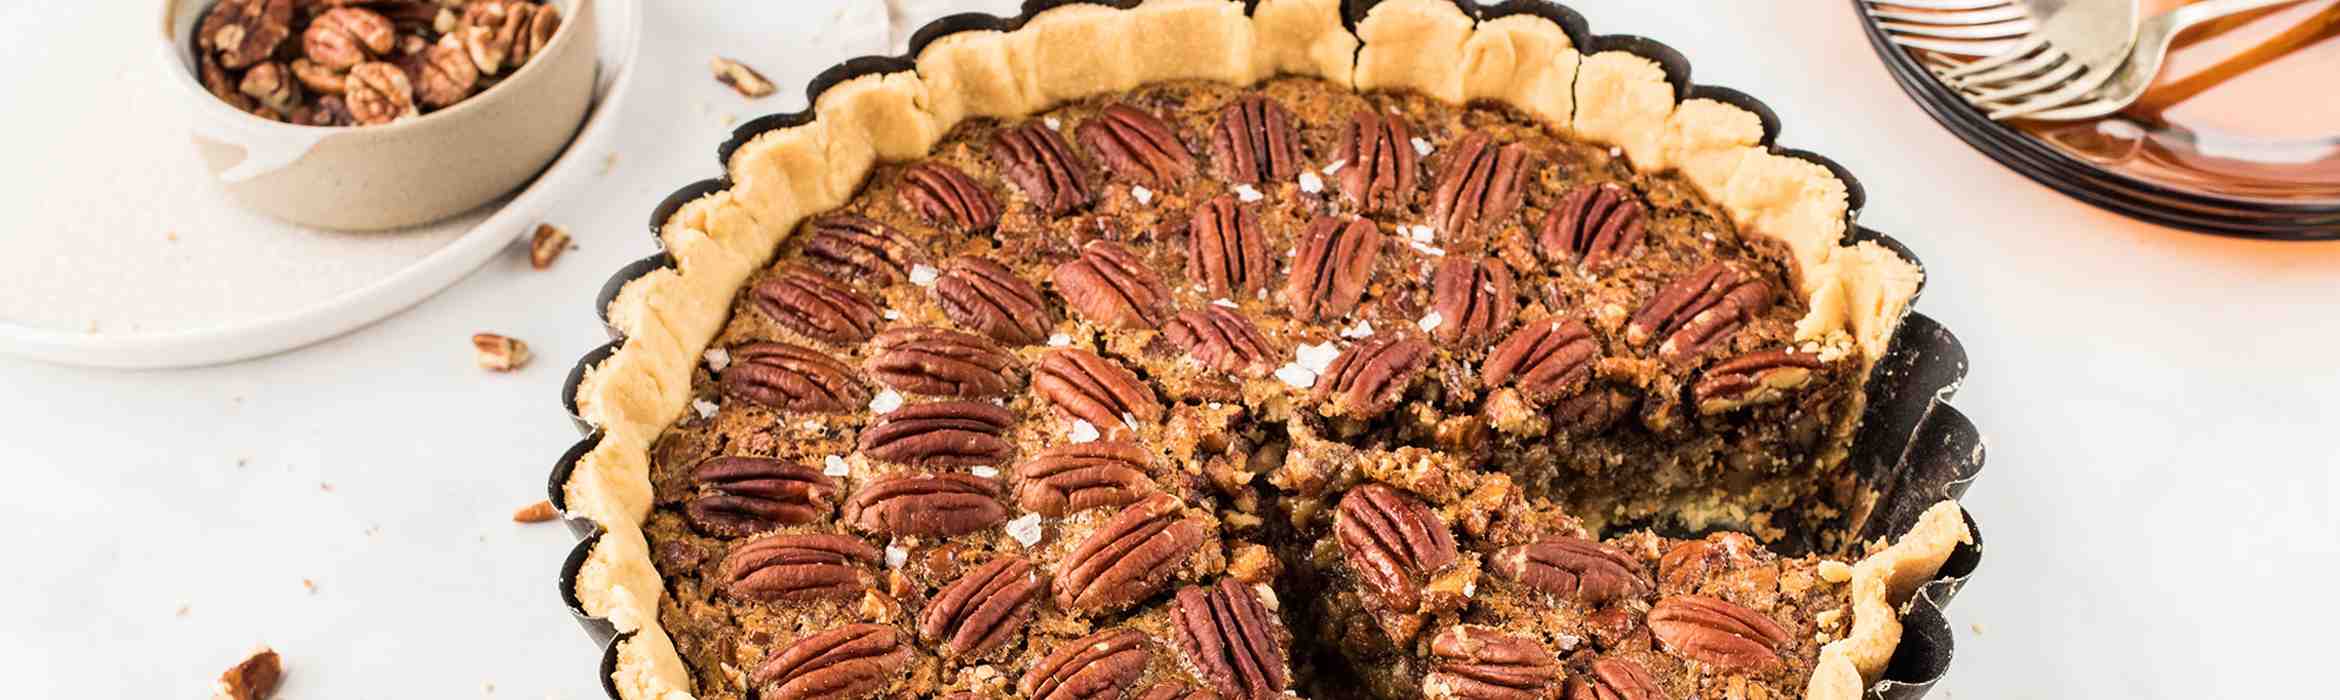 Pecan Pie with Duck Fat Pastry Recipe